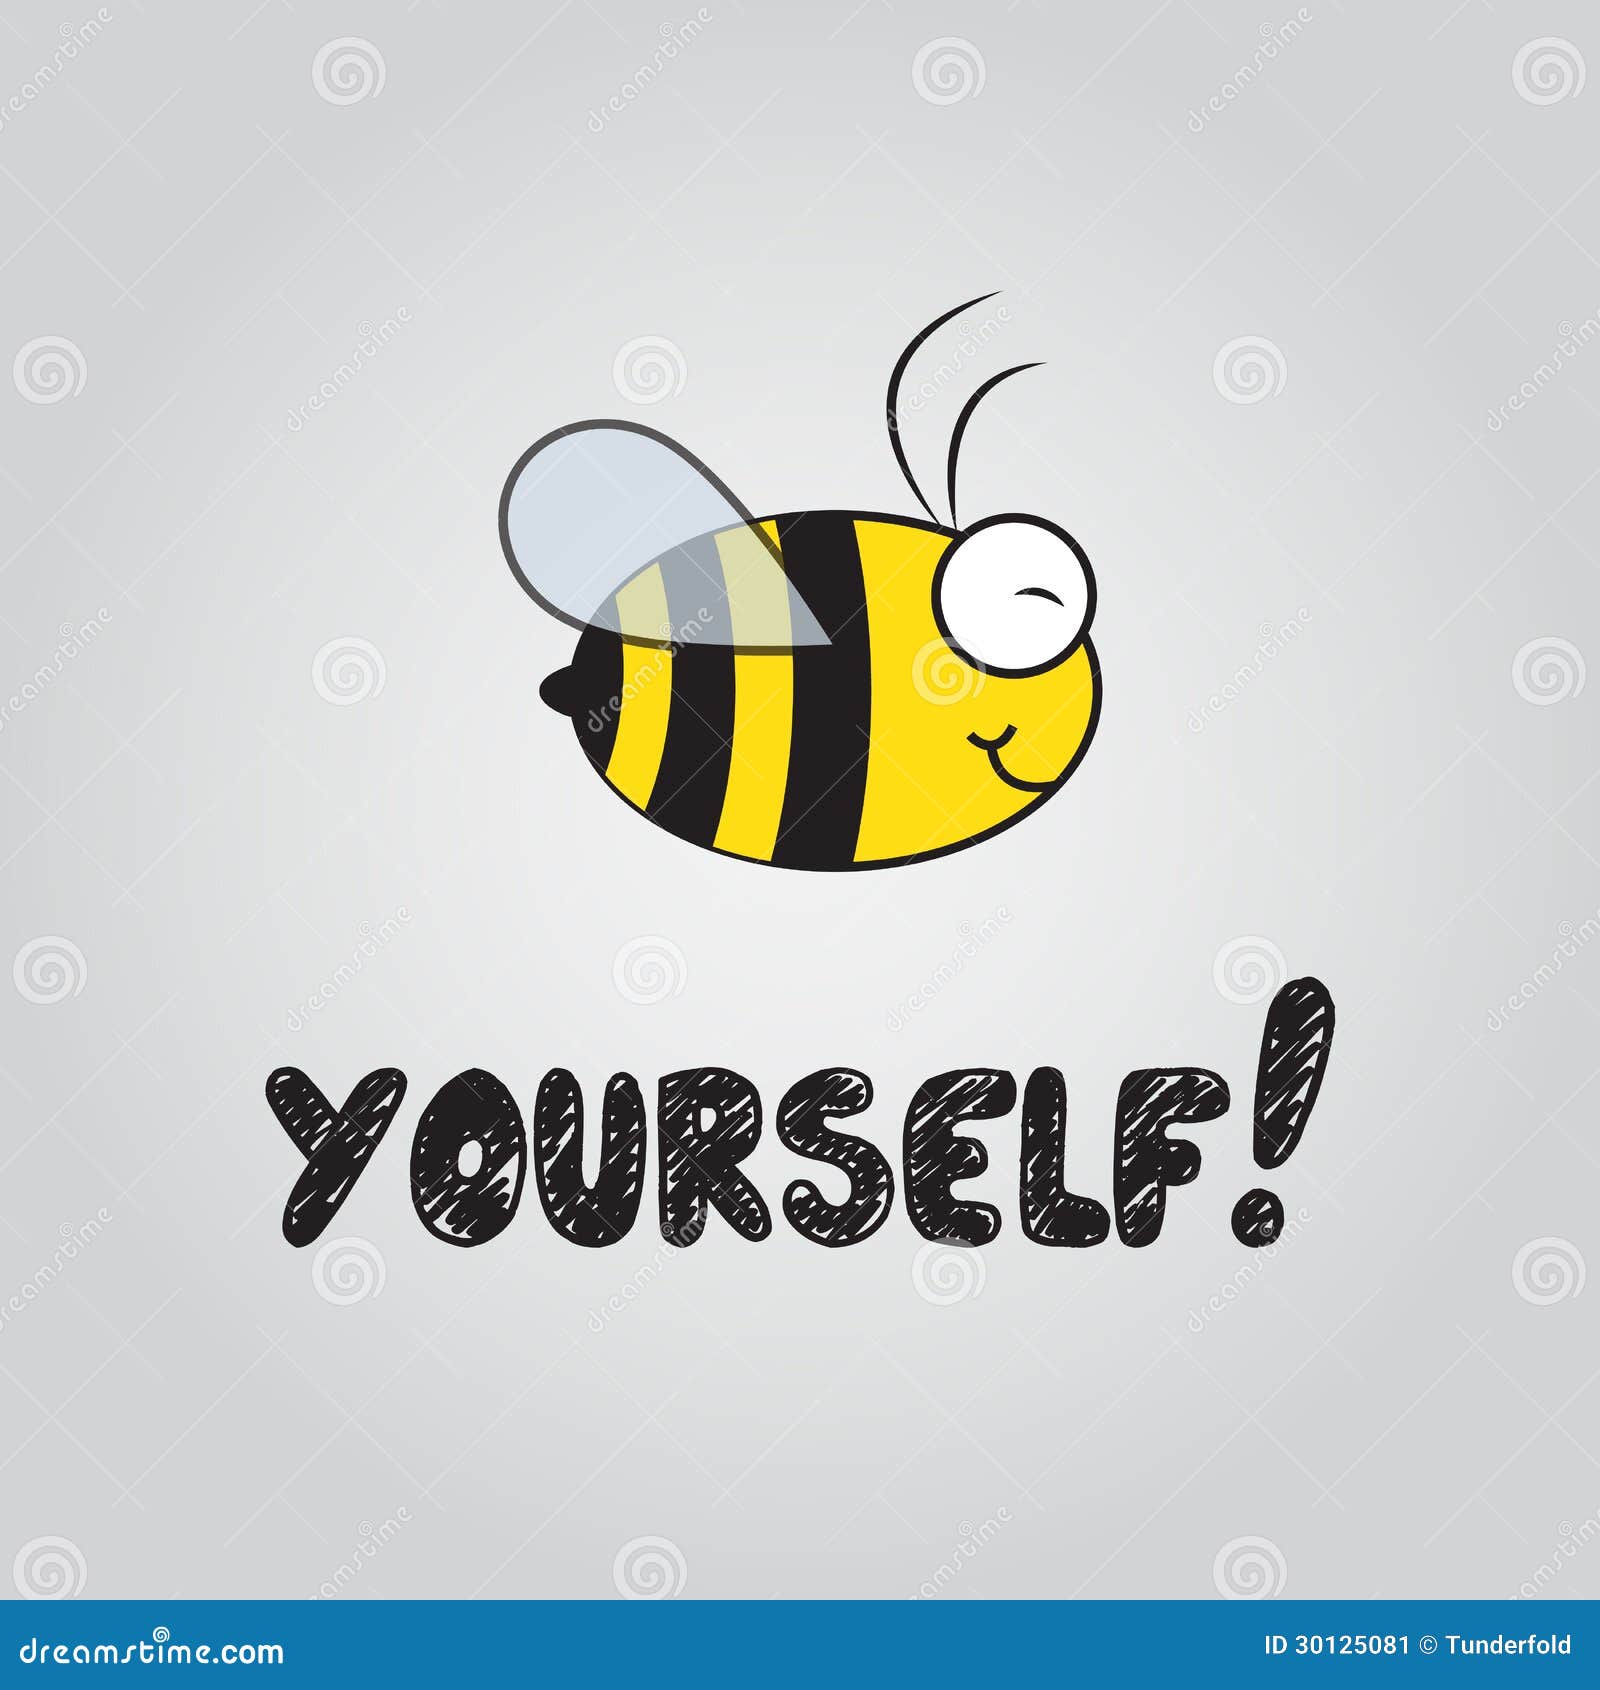 be-yourself-vector-illustration-bee-30125081.jpg